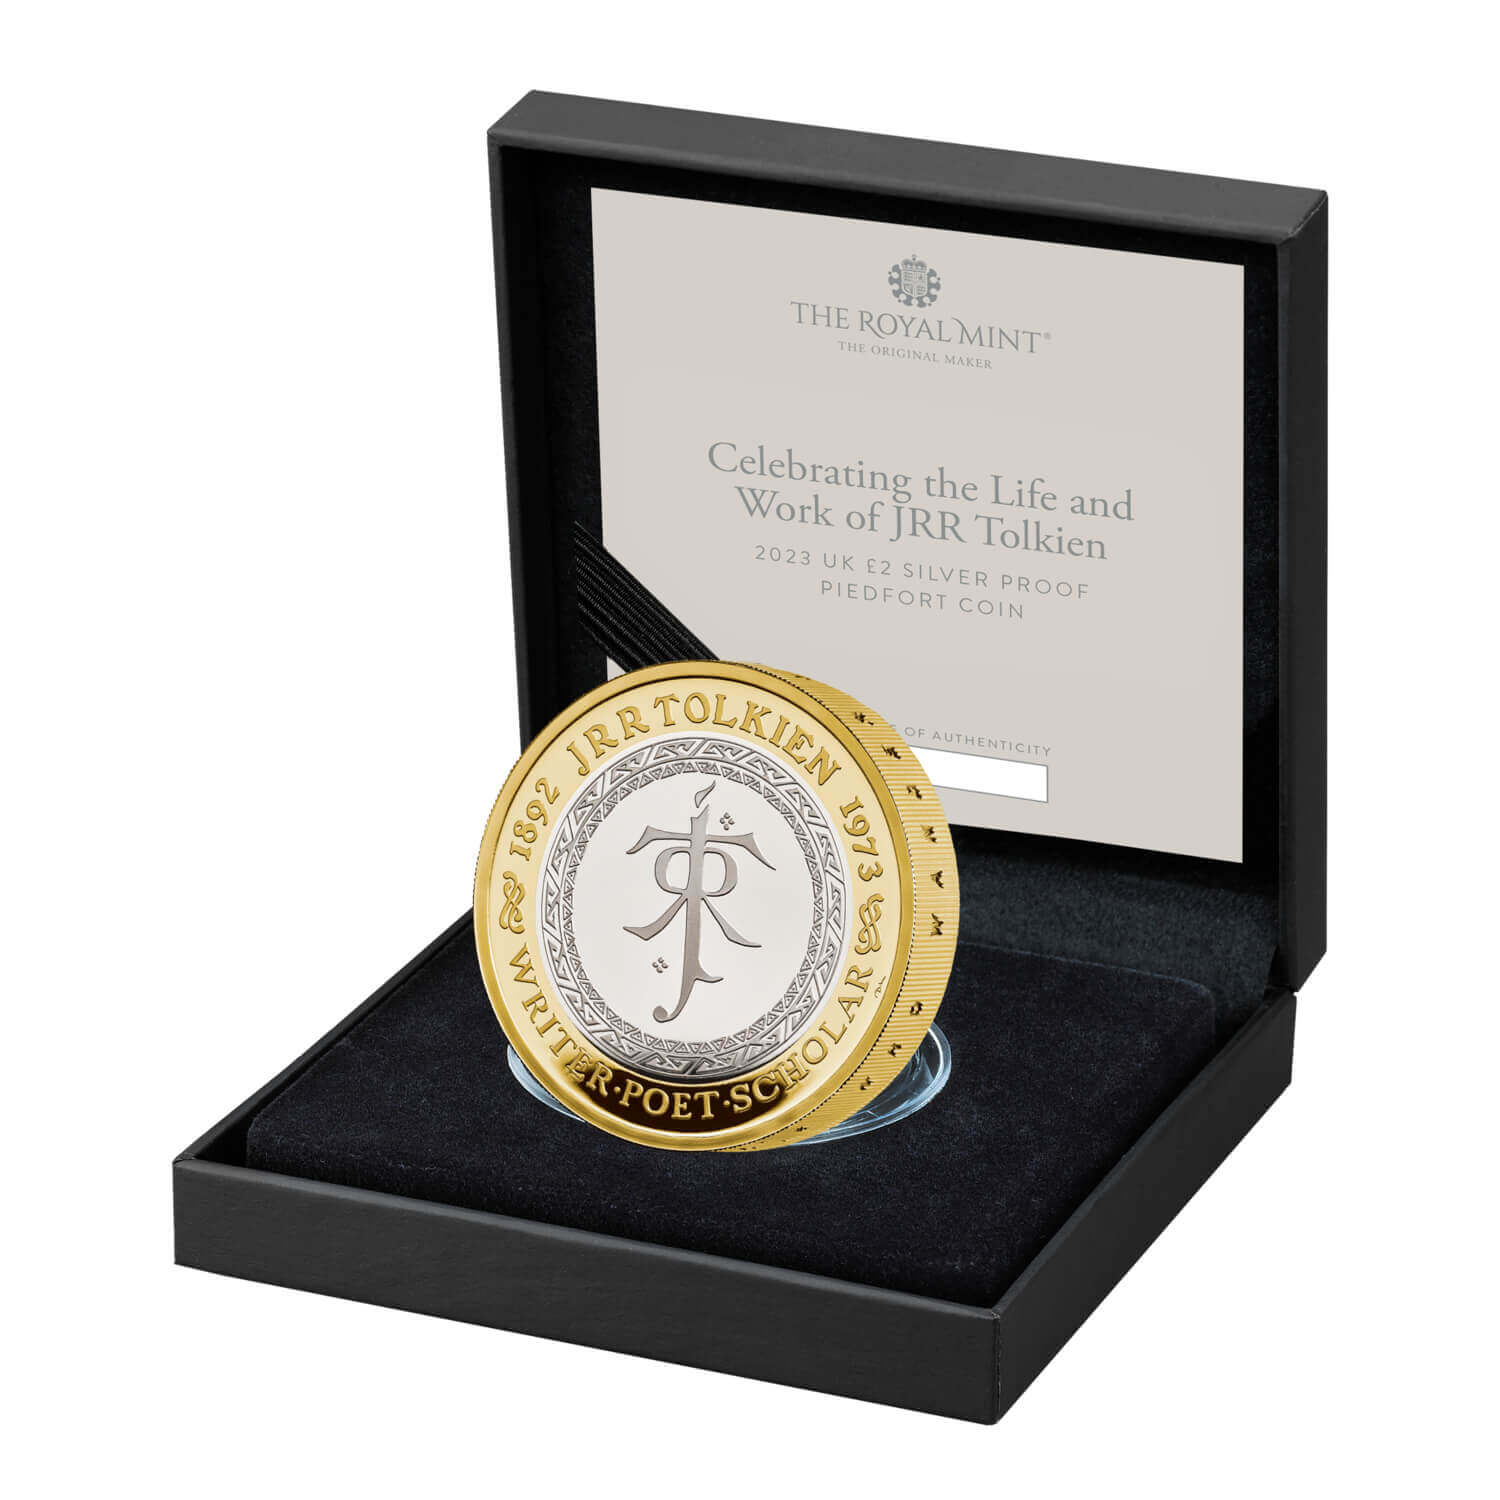 50th-anniversary-of-jrr-tolkien-2023-uk-gbp2-silver-proof-piedfort-coin-case-right---uk23jtpf-1500x1500-f3a2c67.jpg